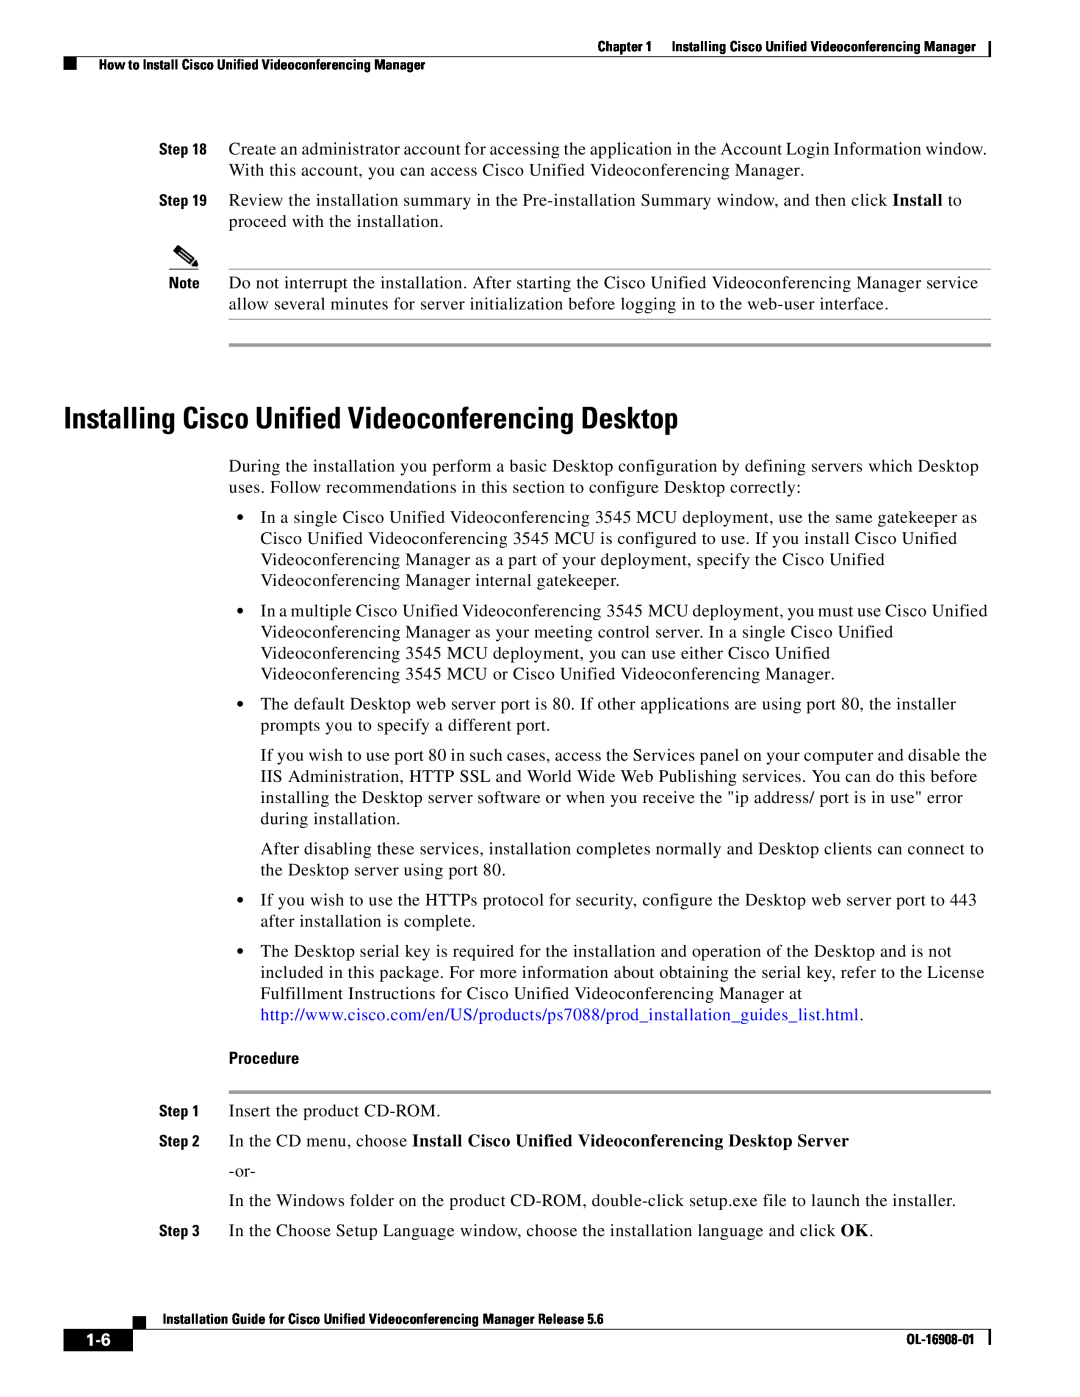 Cisco Systems Unified Videoconferencing Manager manual Installing Cisco Unified Videoconferencing Desktop, Procedure 